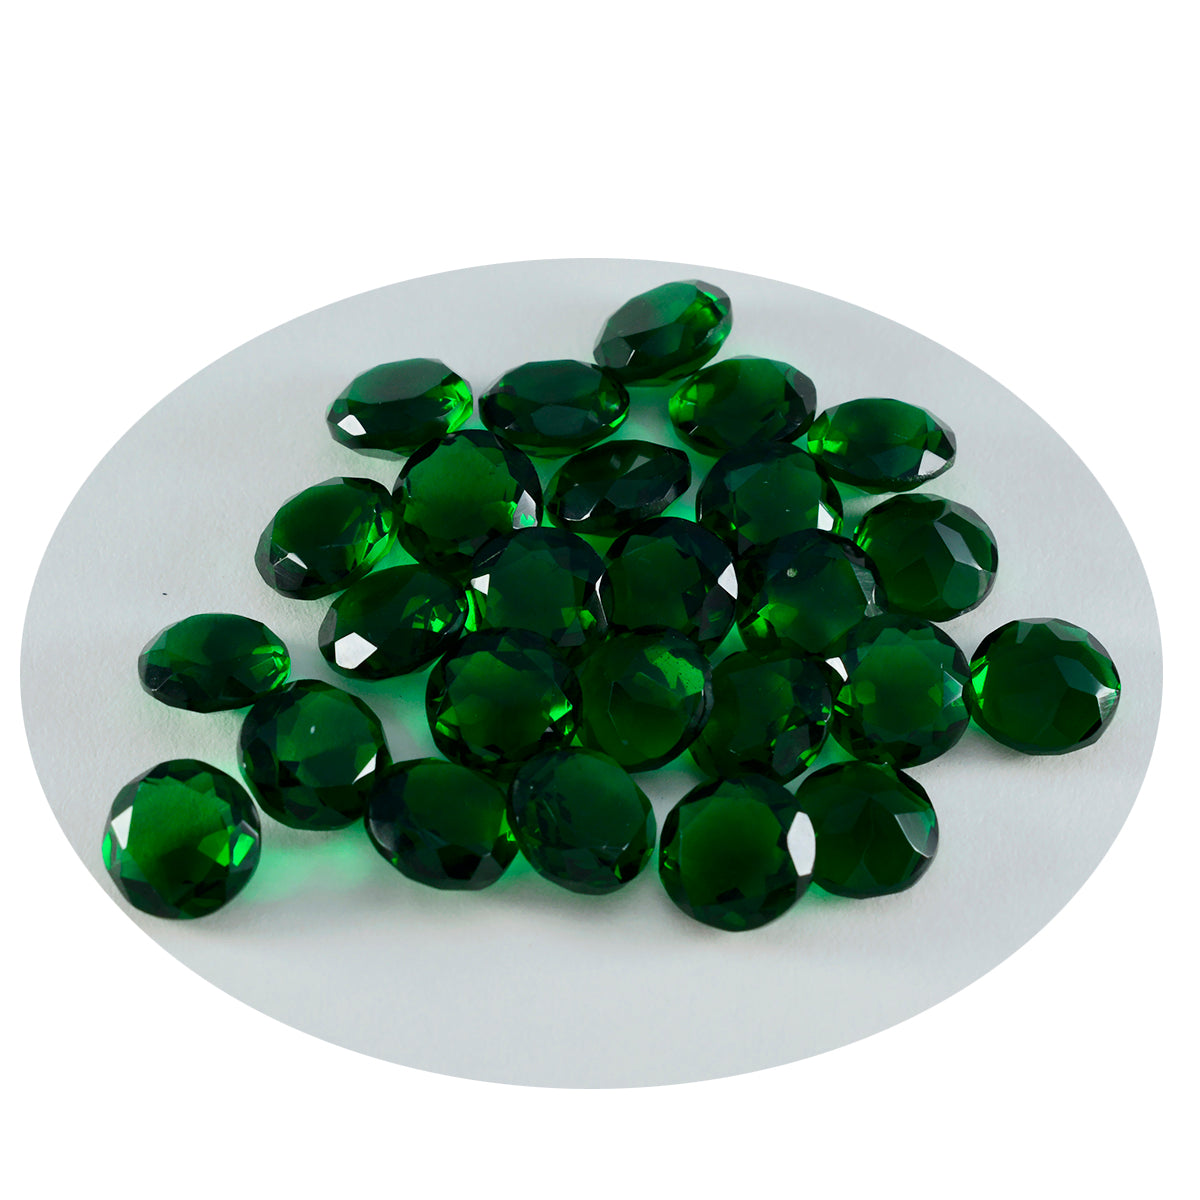 riyogems 1 st grön smaragd cz fasetterad 4x4 mm rund form fantastisk kvalitetspärla